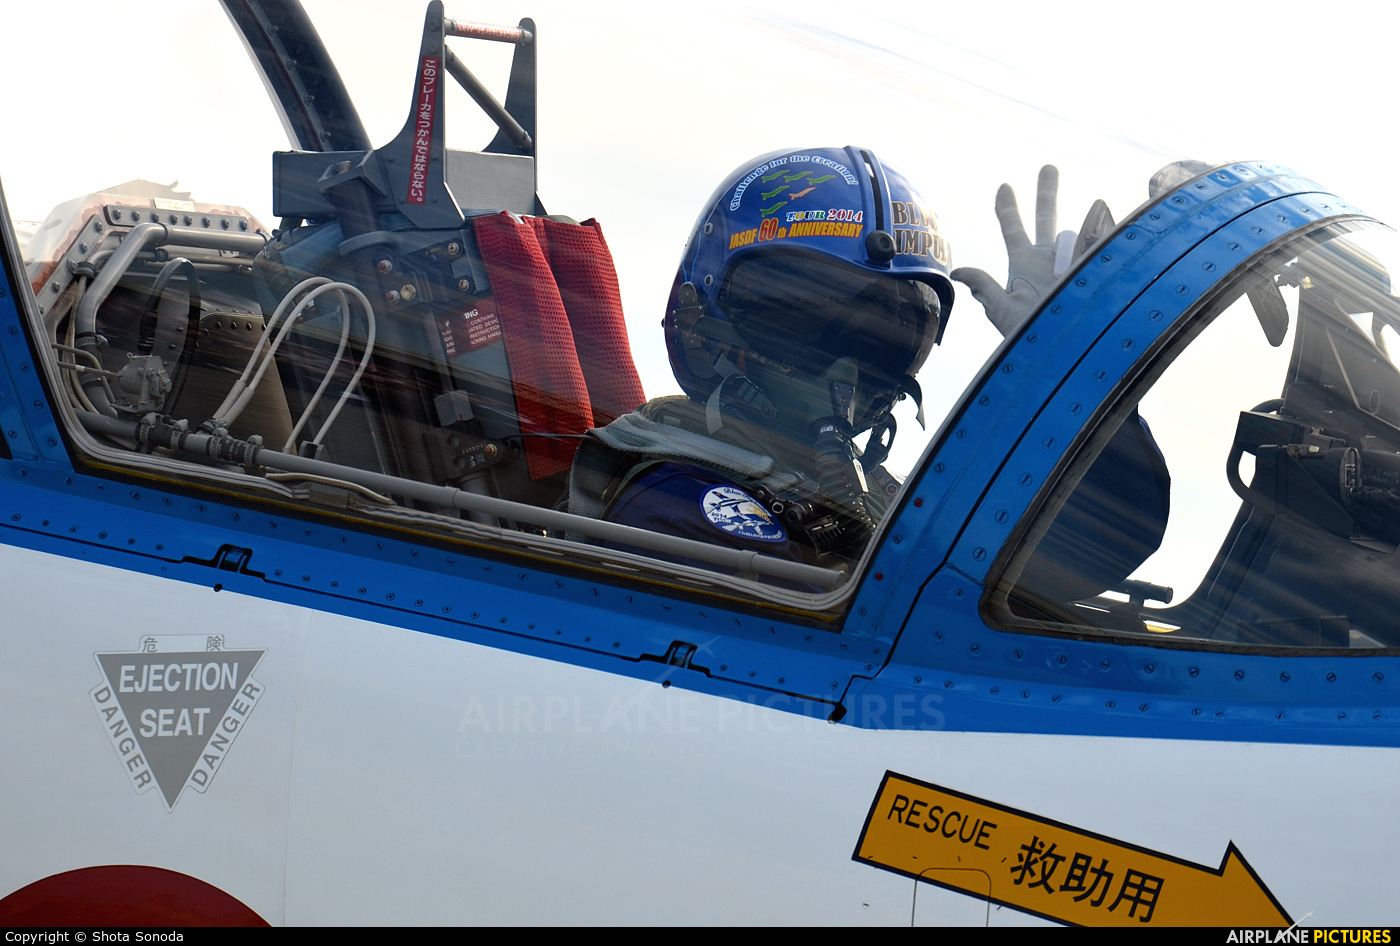 Japan - ASDF: Blue Impulse 46-5730 aircraft at Ashiya AB